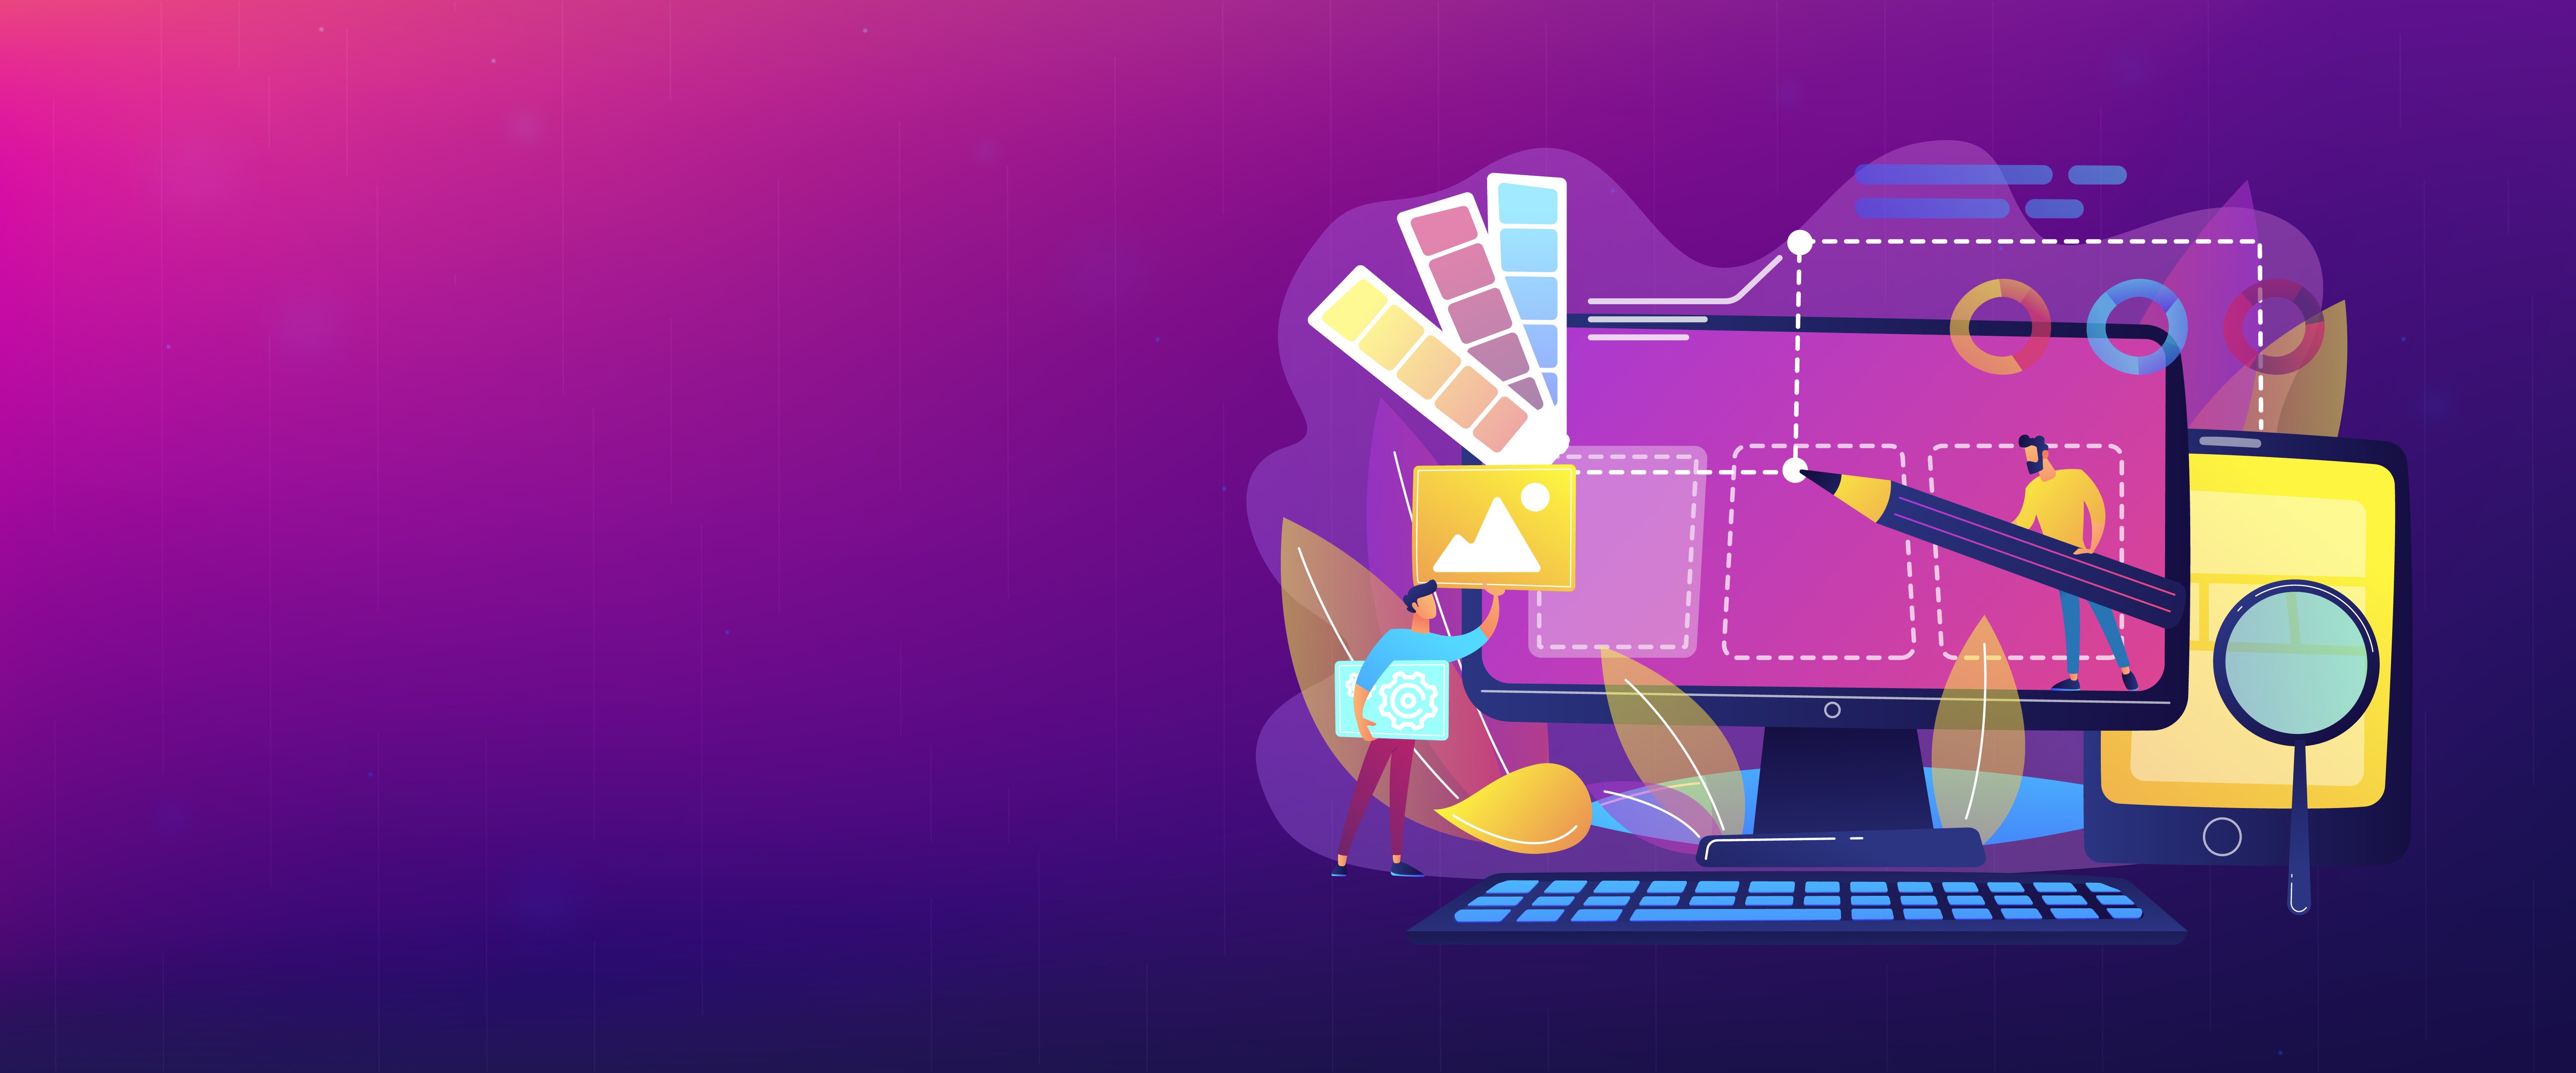 illustration of web design elements and web designer drawing on dark purple pink background 